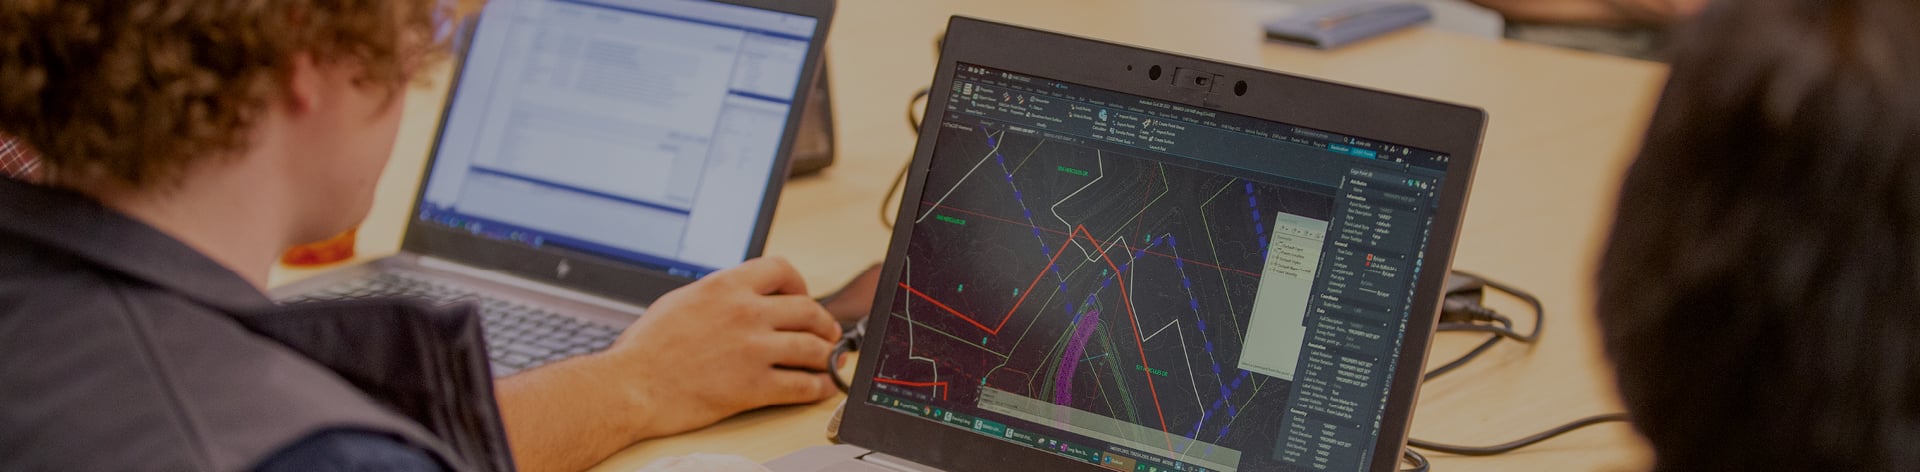 We Innovate: A VHB team member works on model-based design technology on their laptop.